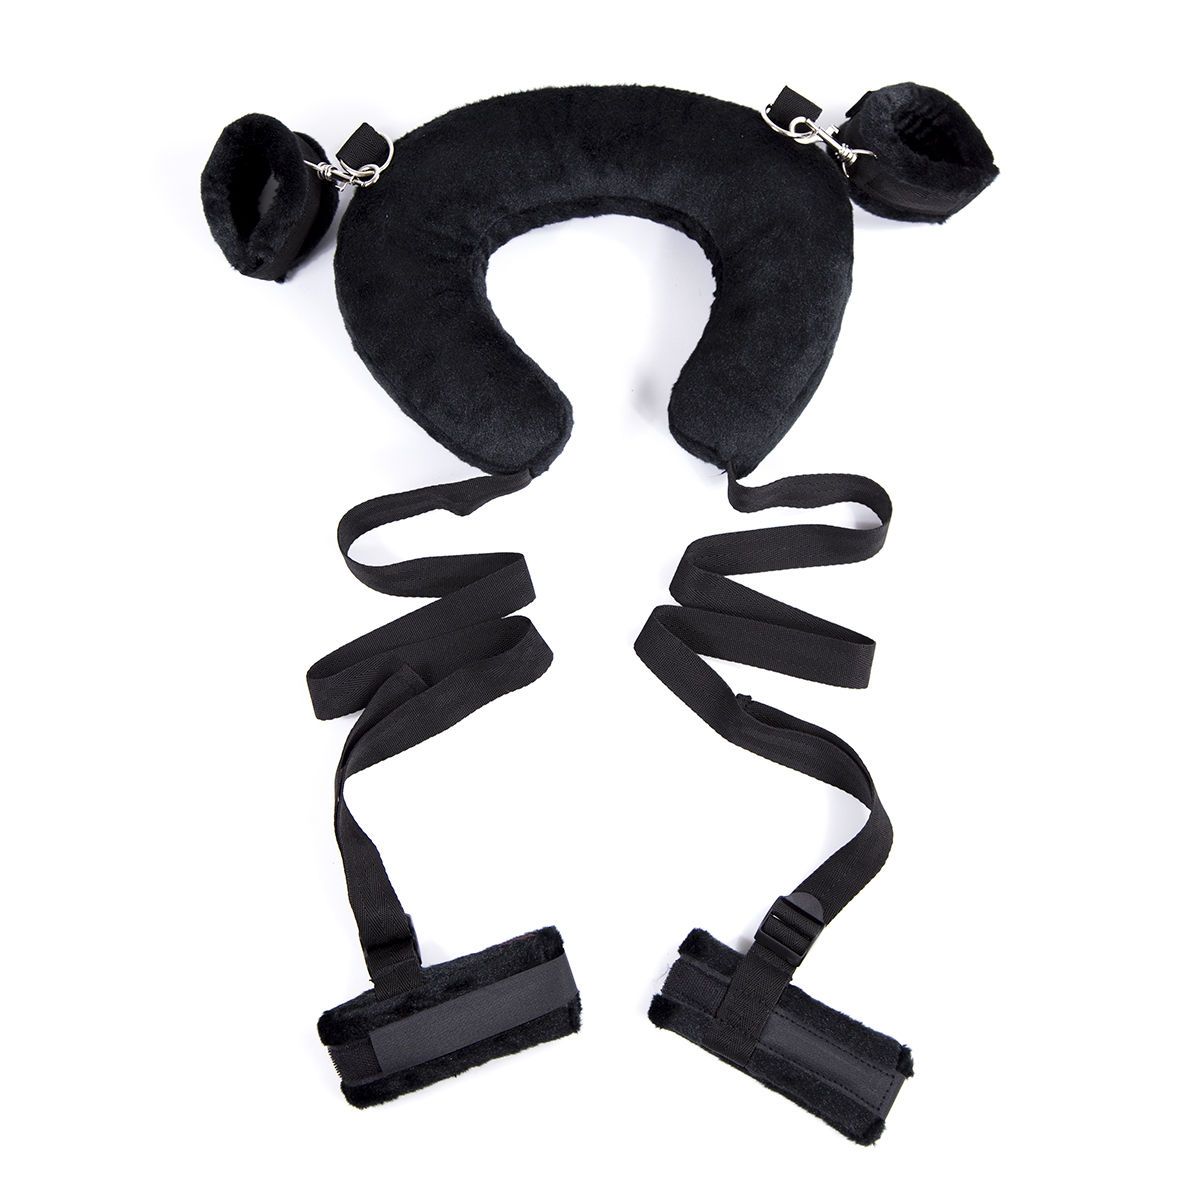 Fun handcuffs handcuffs tied tied shackles alternative toys flirtatious supplies